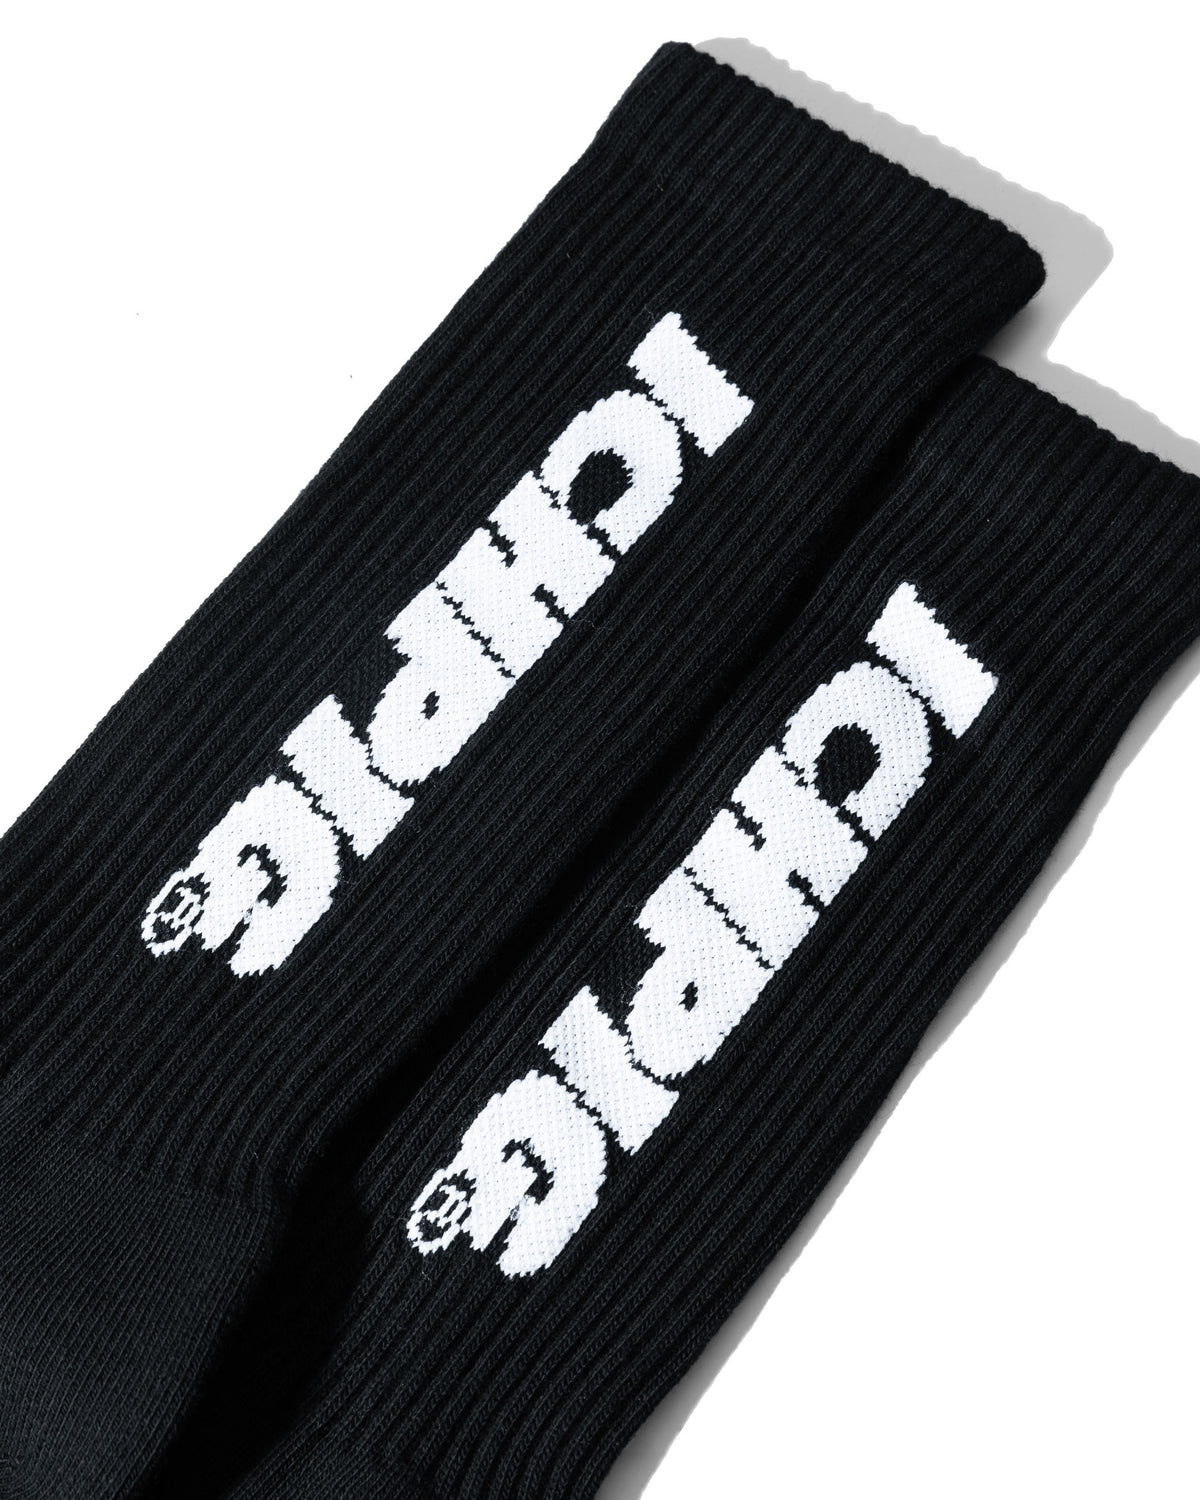 Sprinters Calf Socks - Black / White